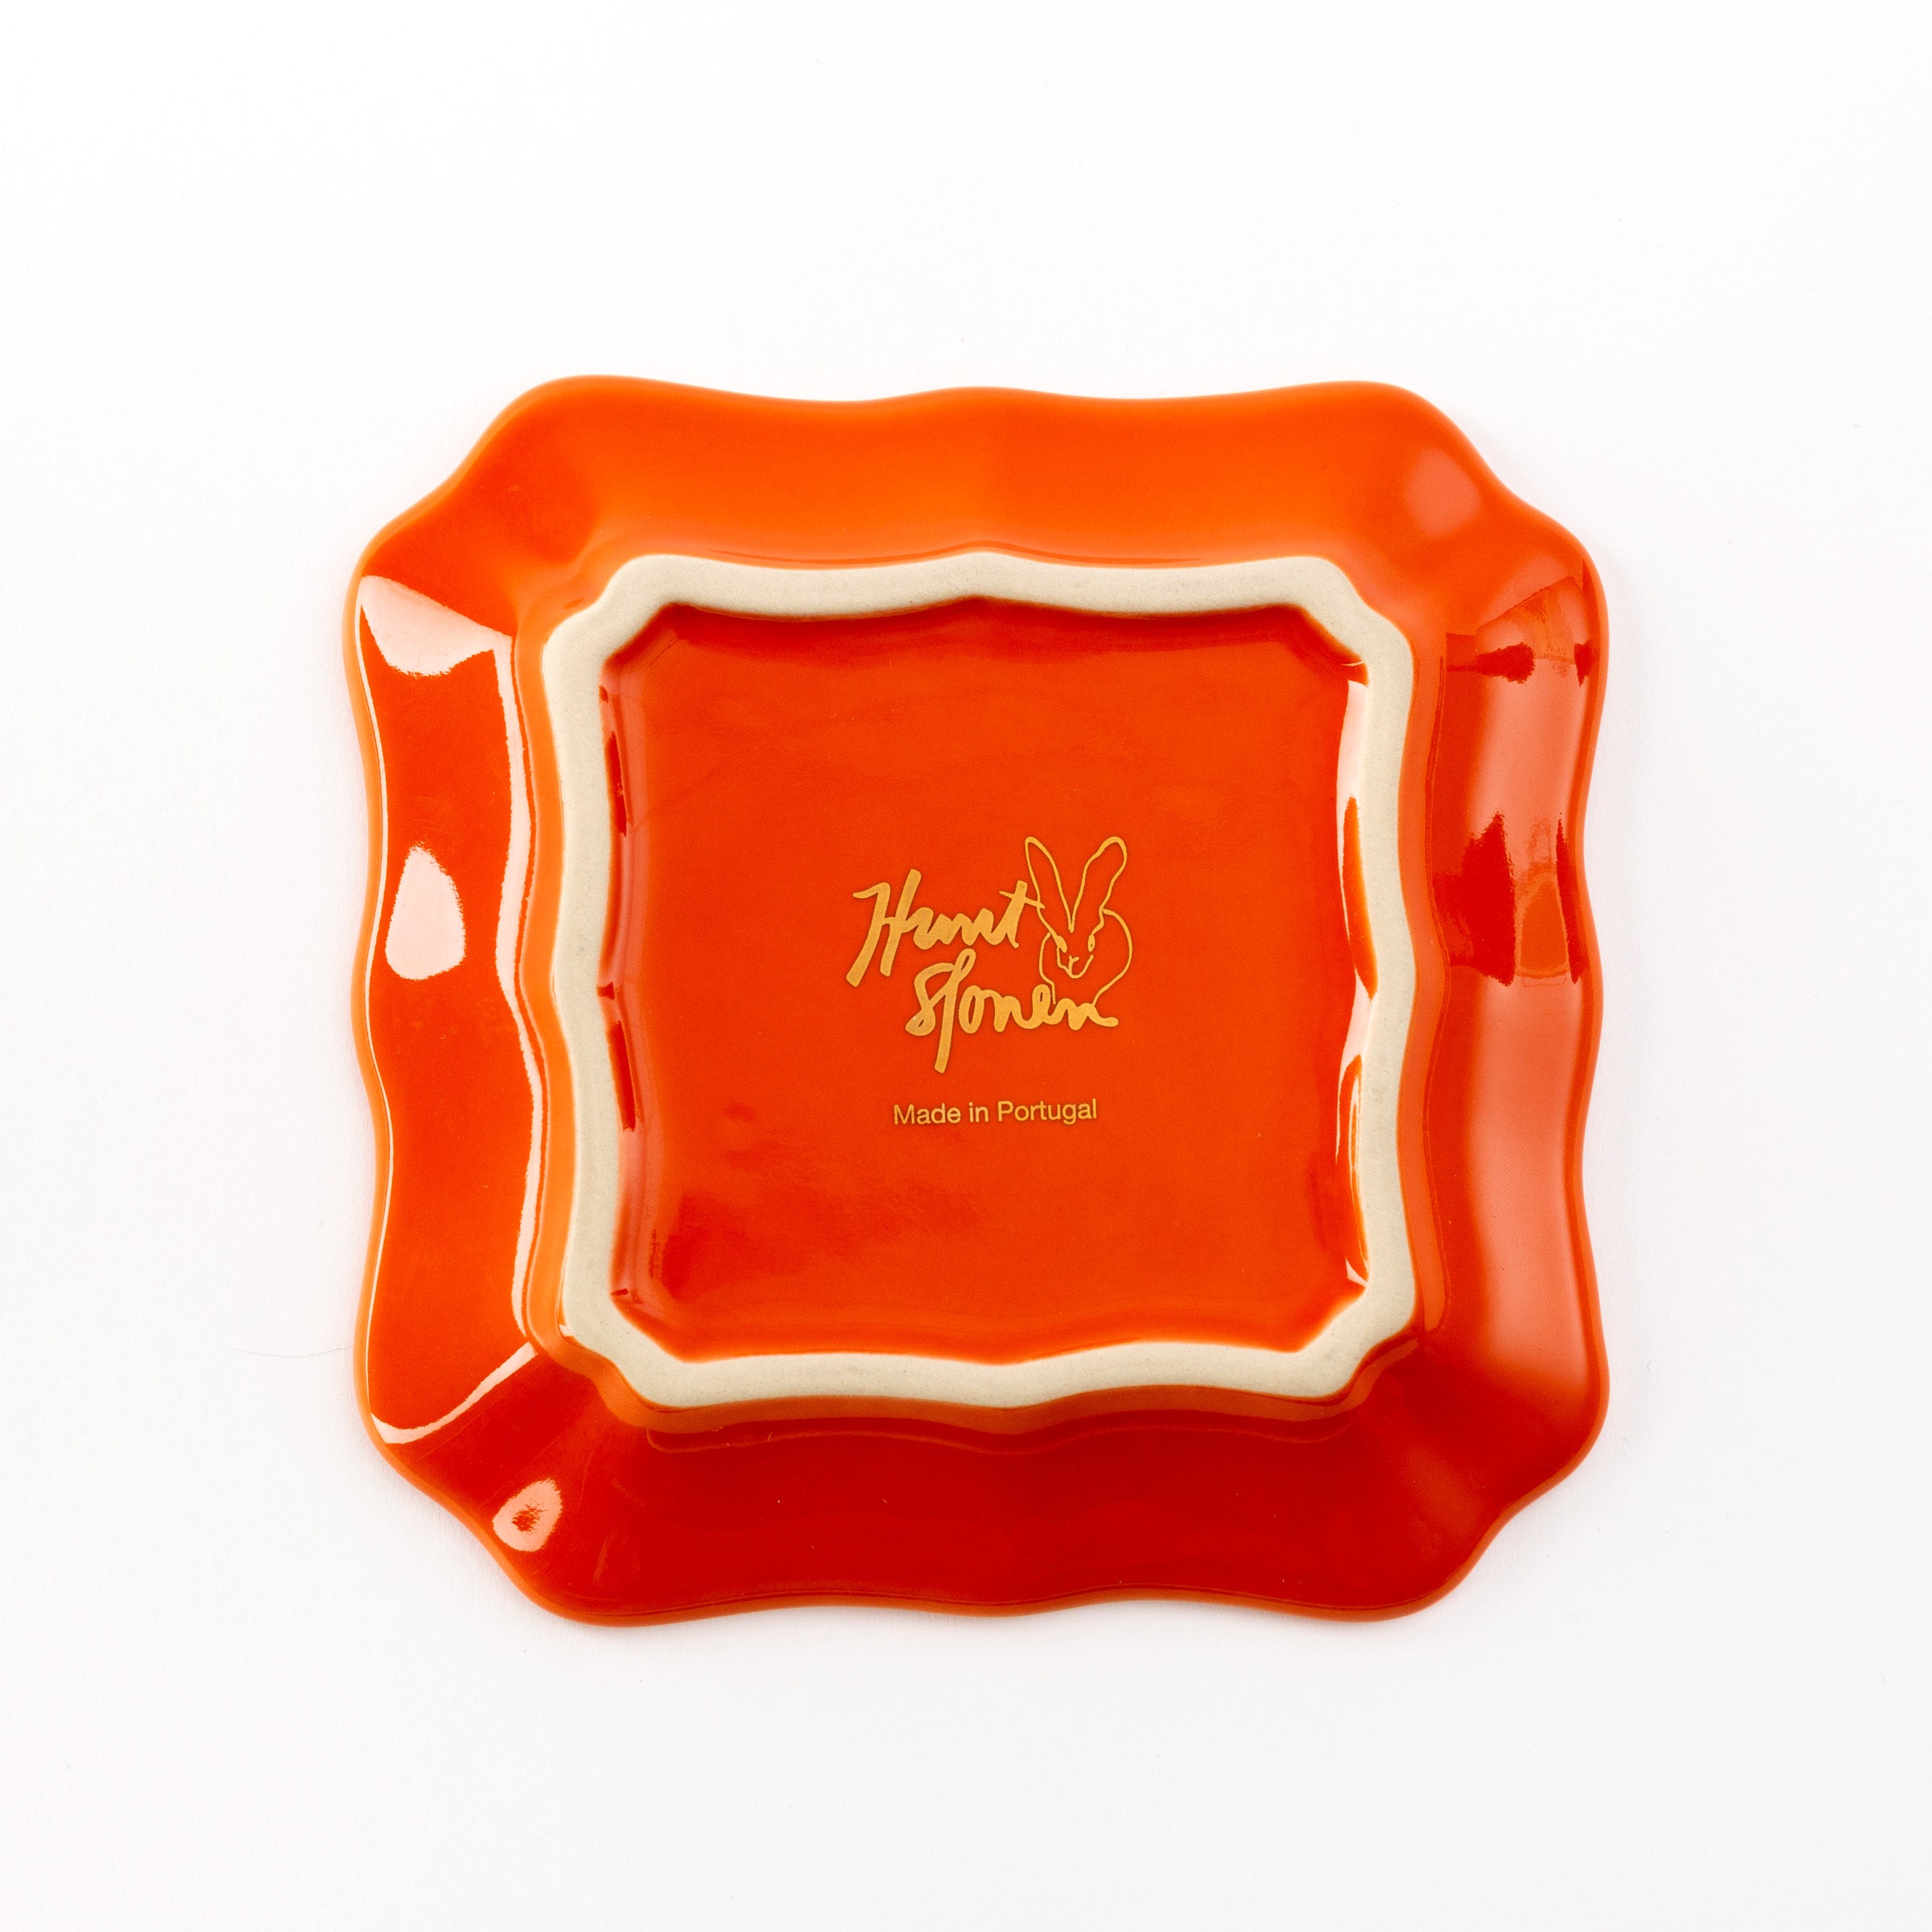 Set of 2 Bunny Portrait Plates - Orange with Hand-Painted Gold Rim